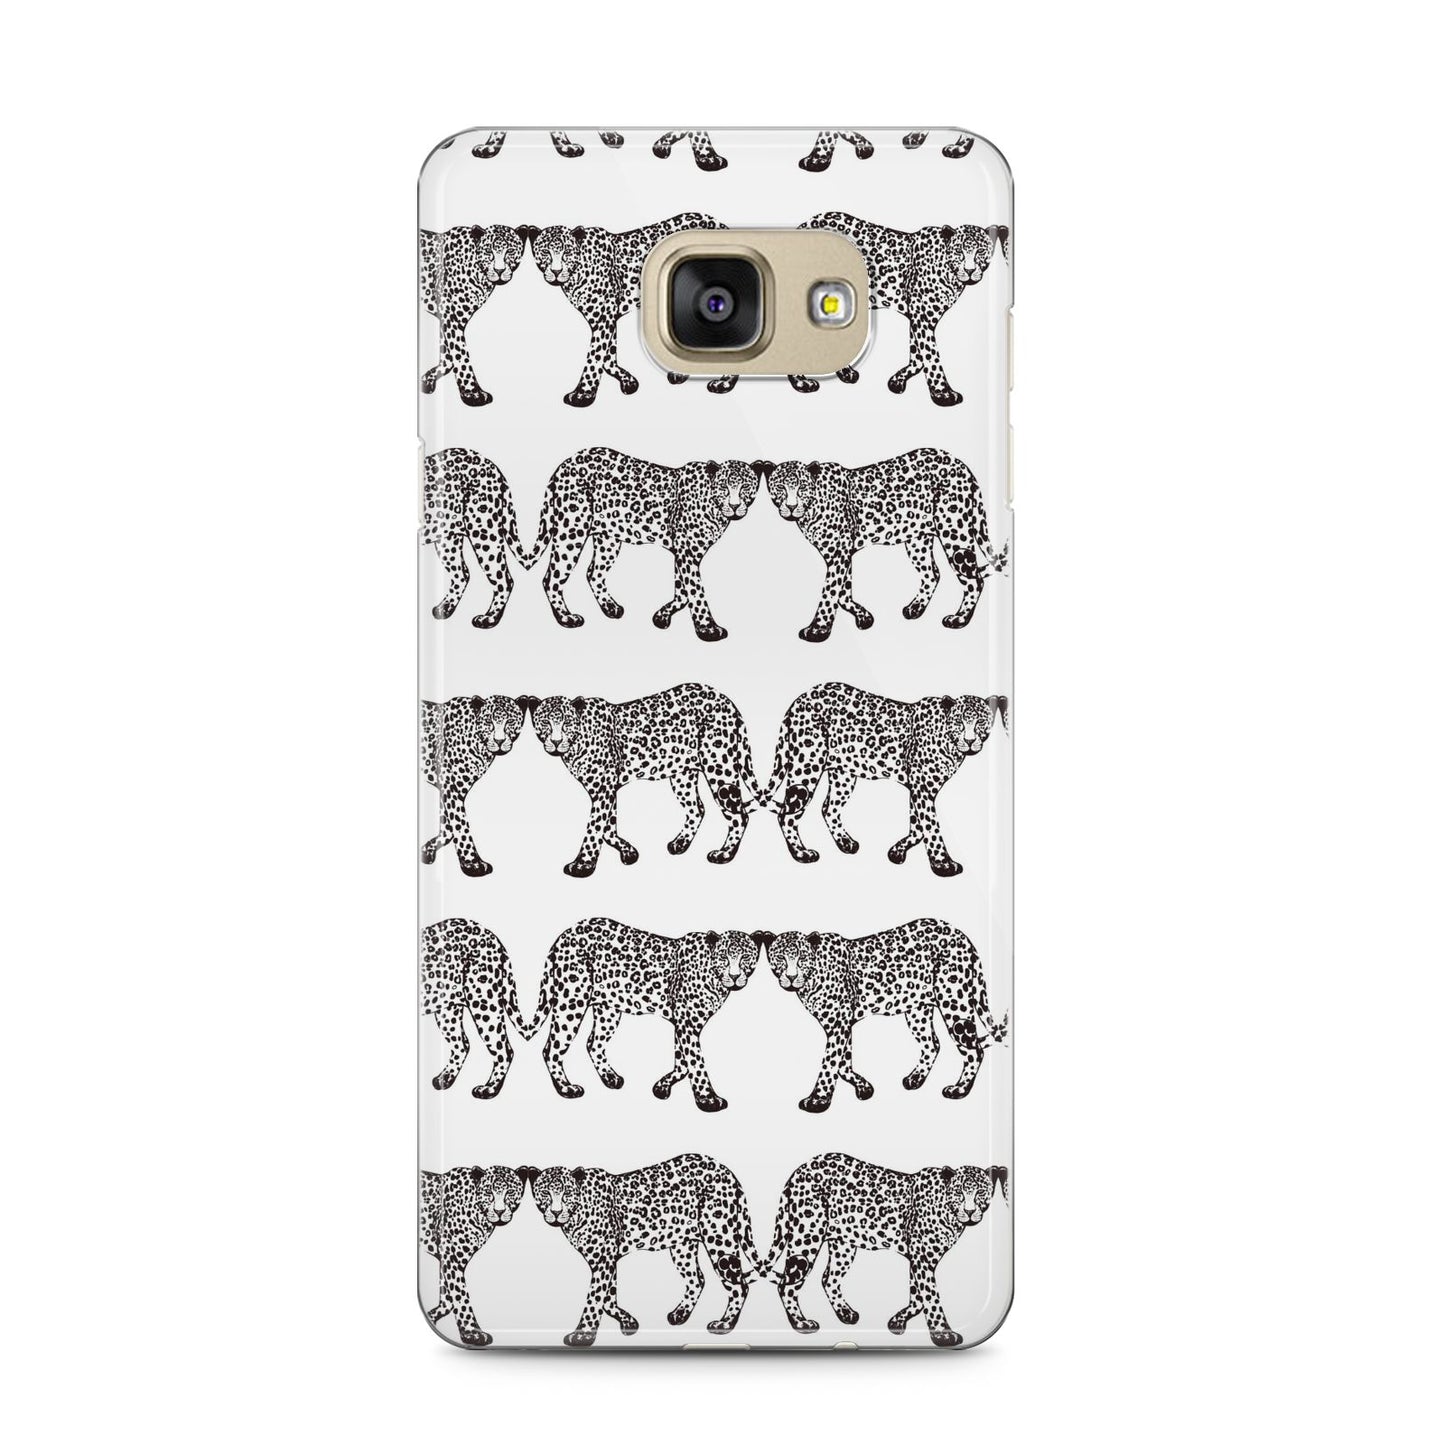 Monochrome Mirrored Leopard Print Samsung Galaxy A5 2016 Case on gold phone